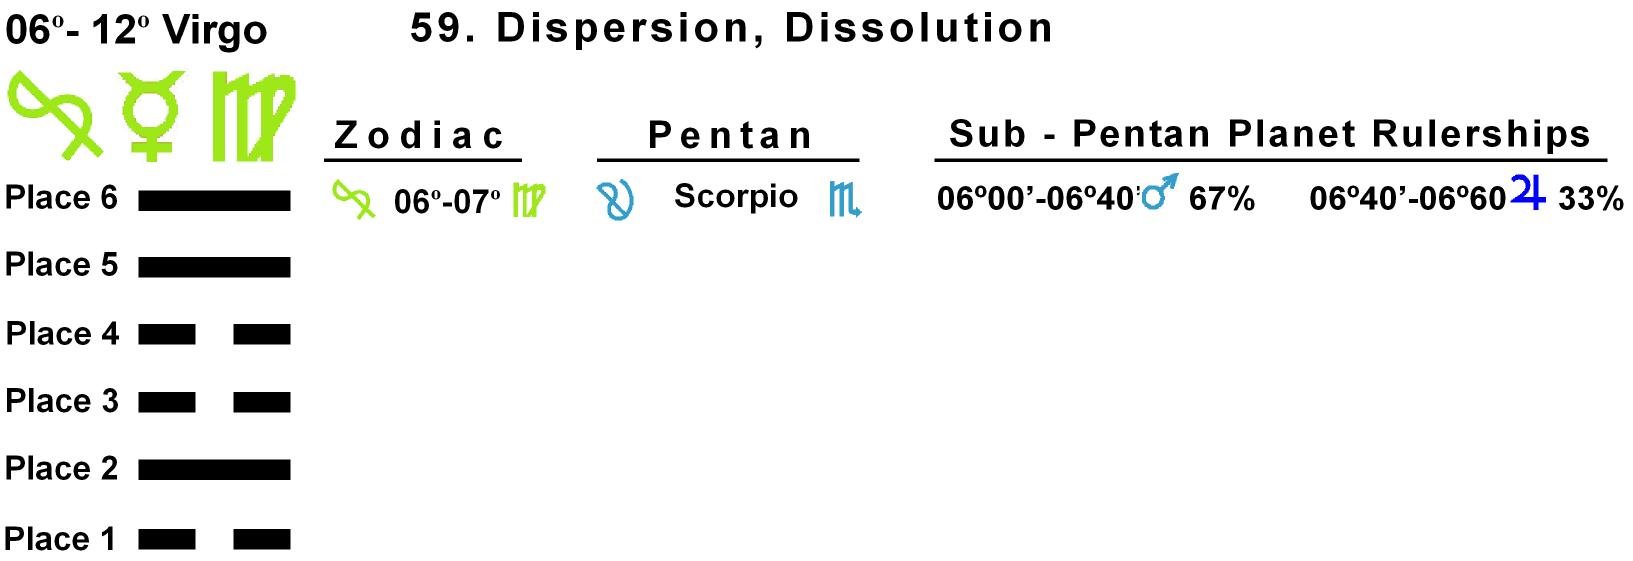 Pent-lines-06VI 06-07 Hx-59 Dispersion